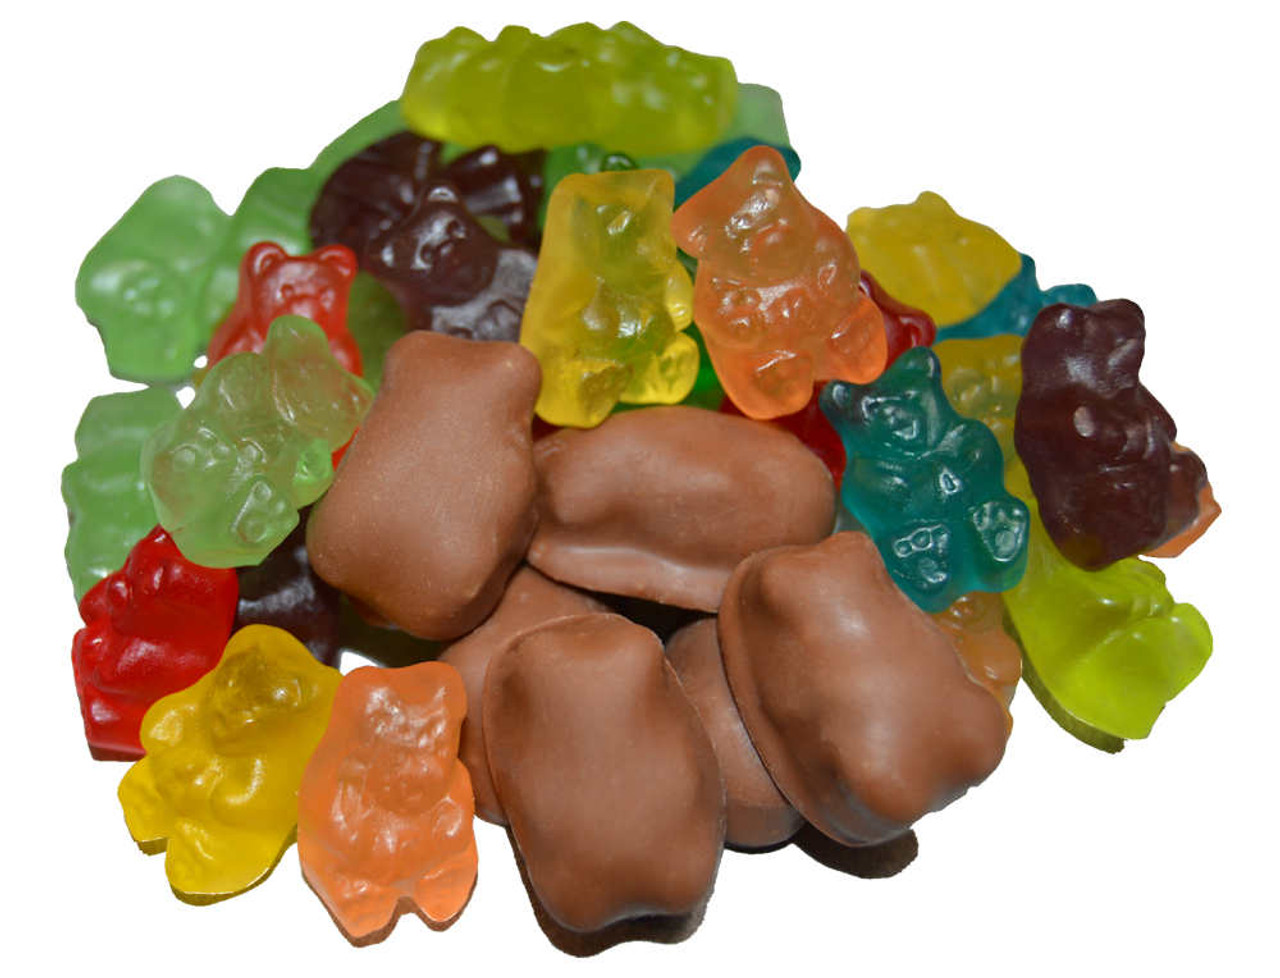 The Silly Pops Boozy Bears Gummy BearMold Candy Chocolate Baking Animals Bears Alcohol Gummy